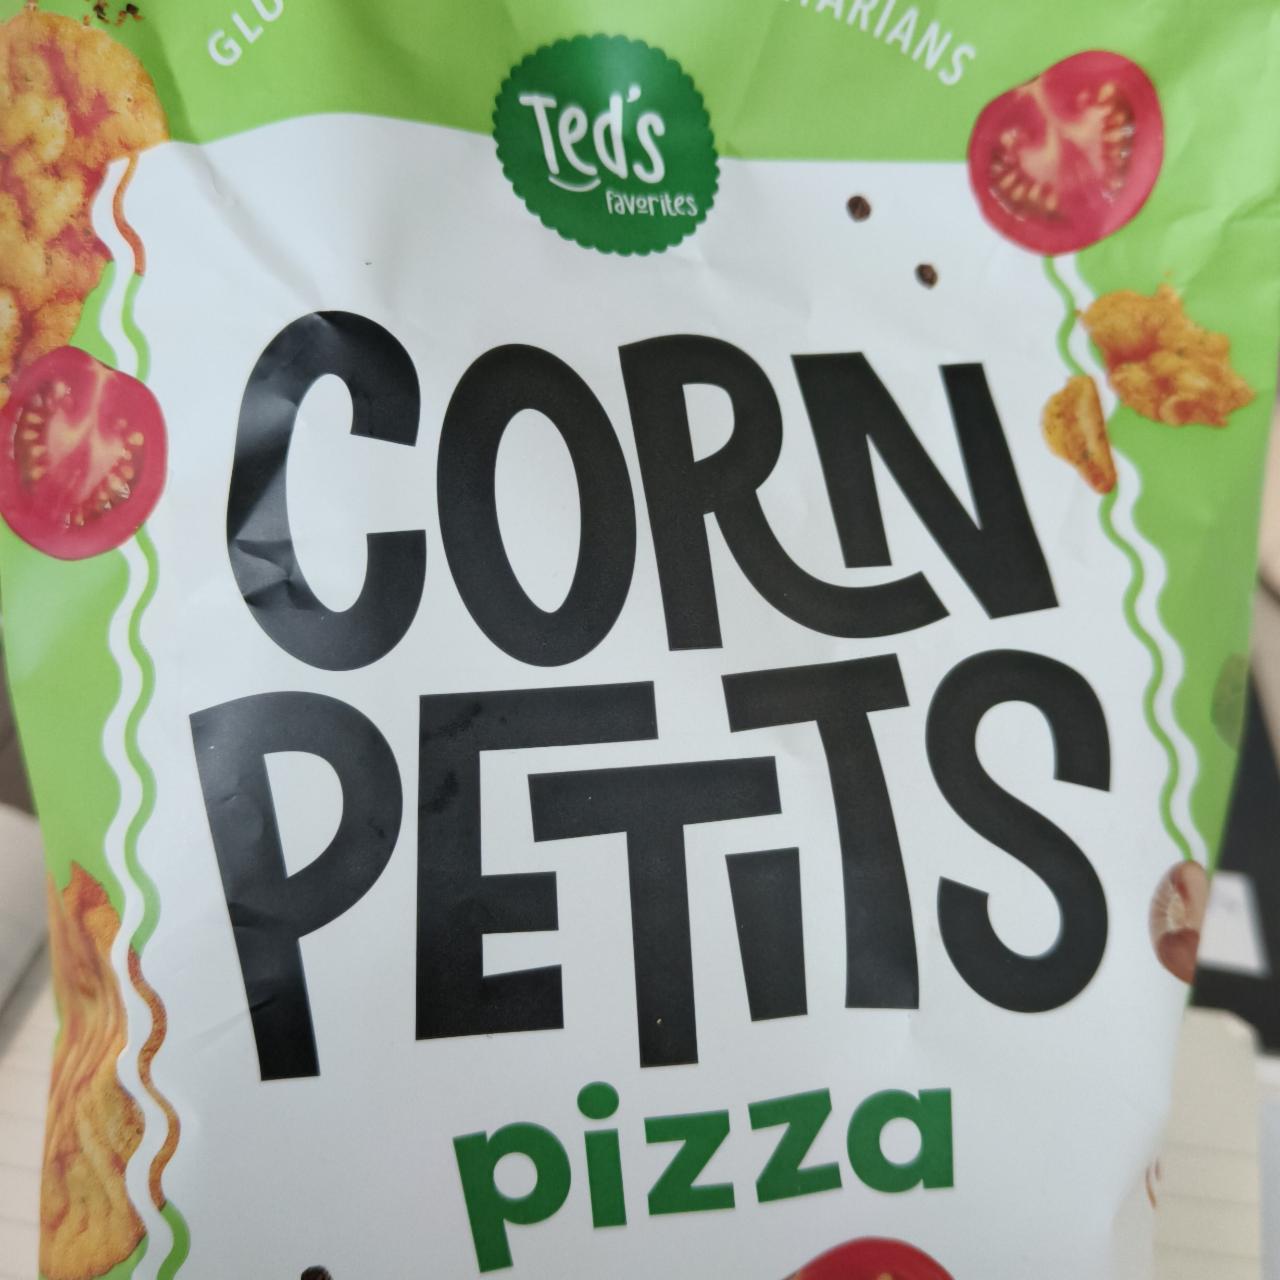 Fotografie - Corn petits pizza Ted's favorites